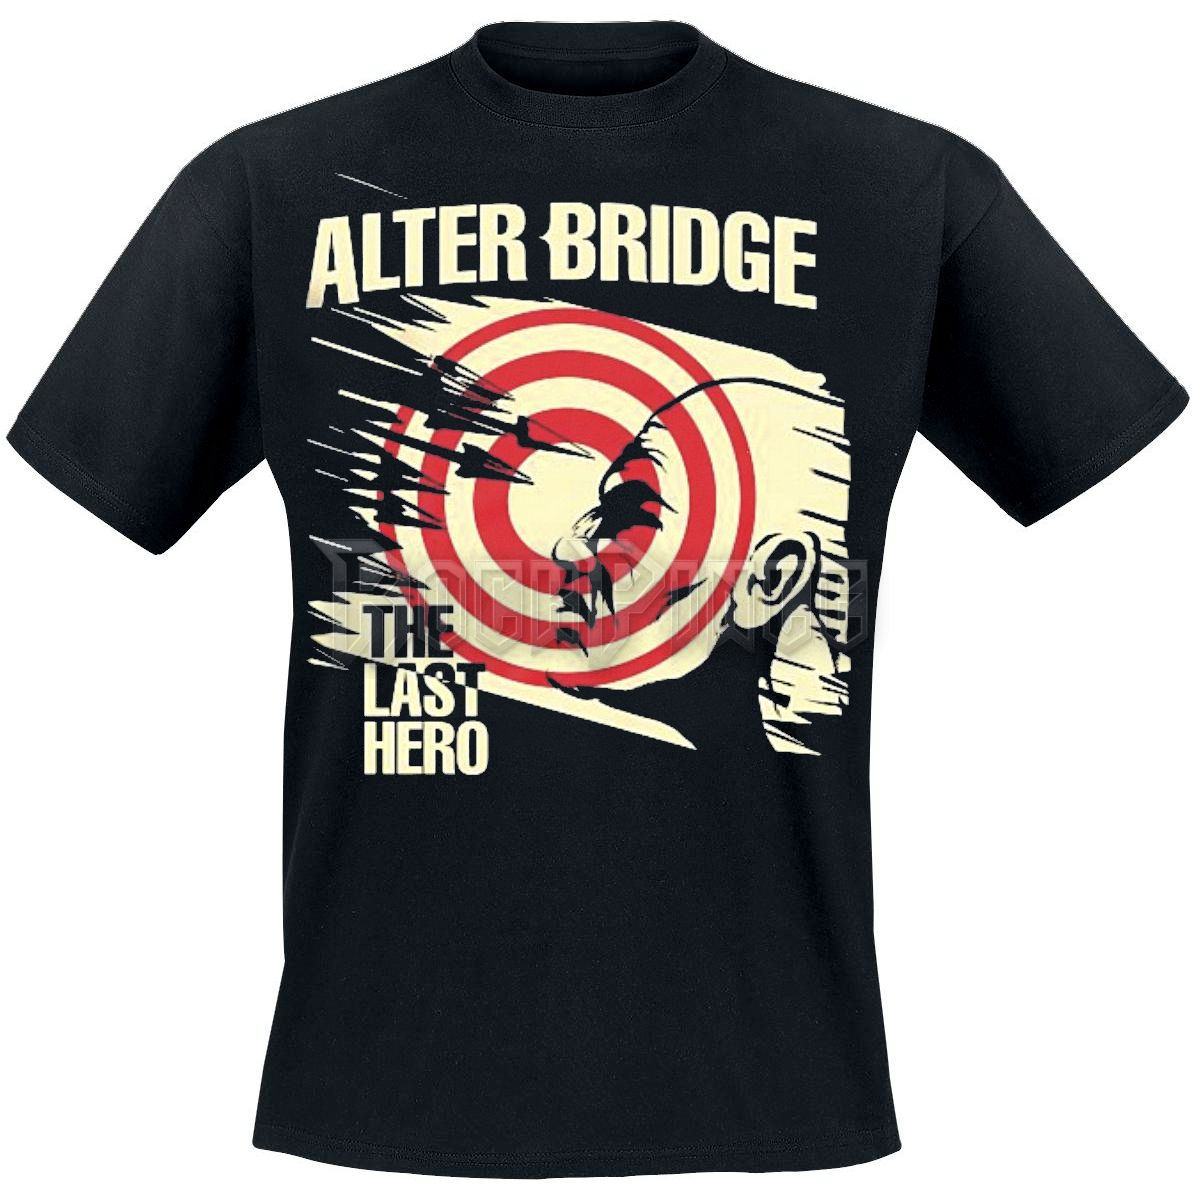 Alter Bridge - The Last Hero - UNISEX PÓLÓ